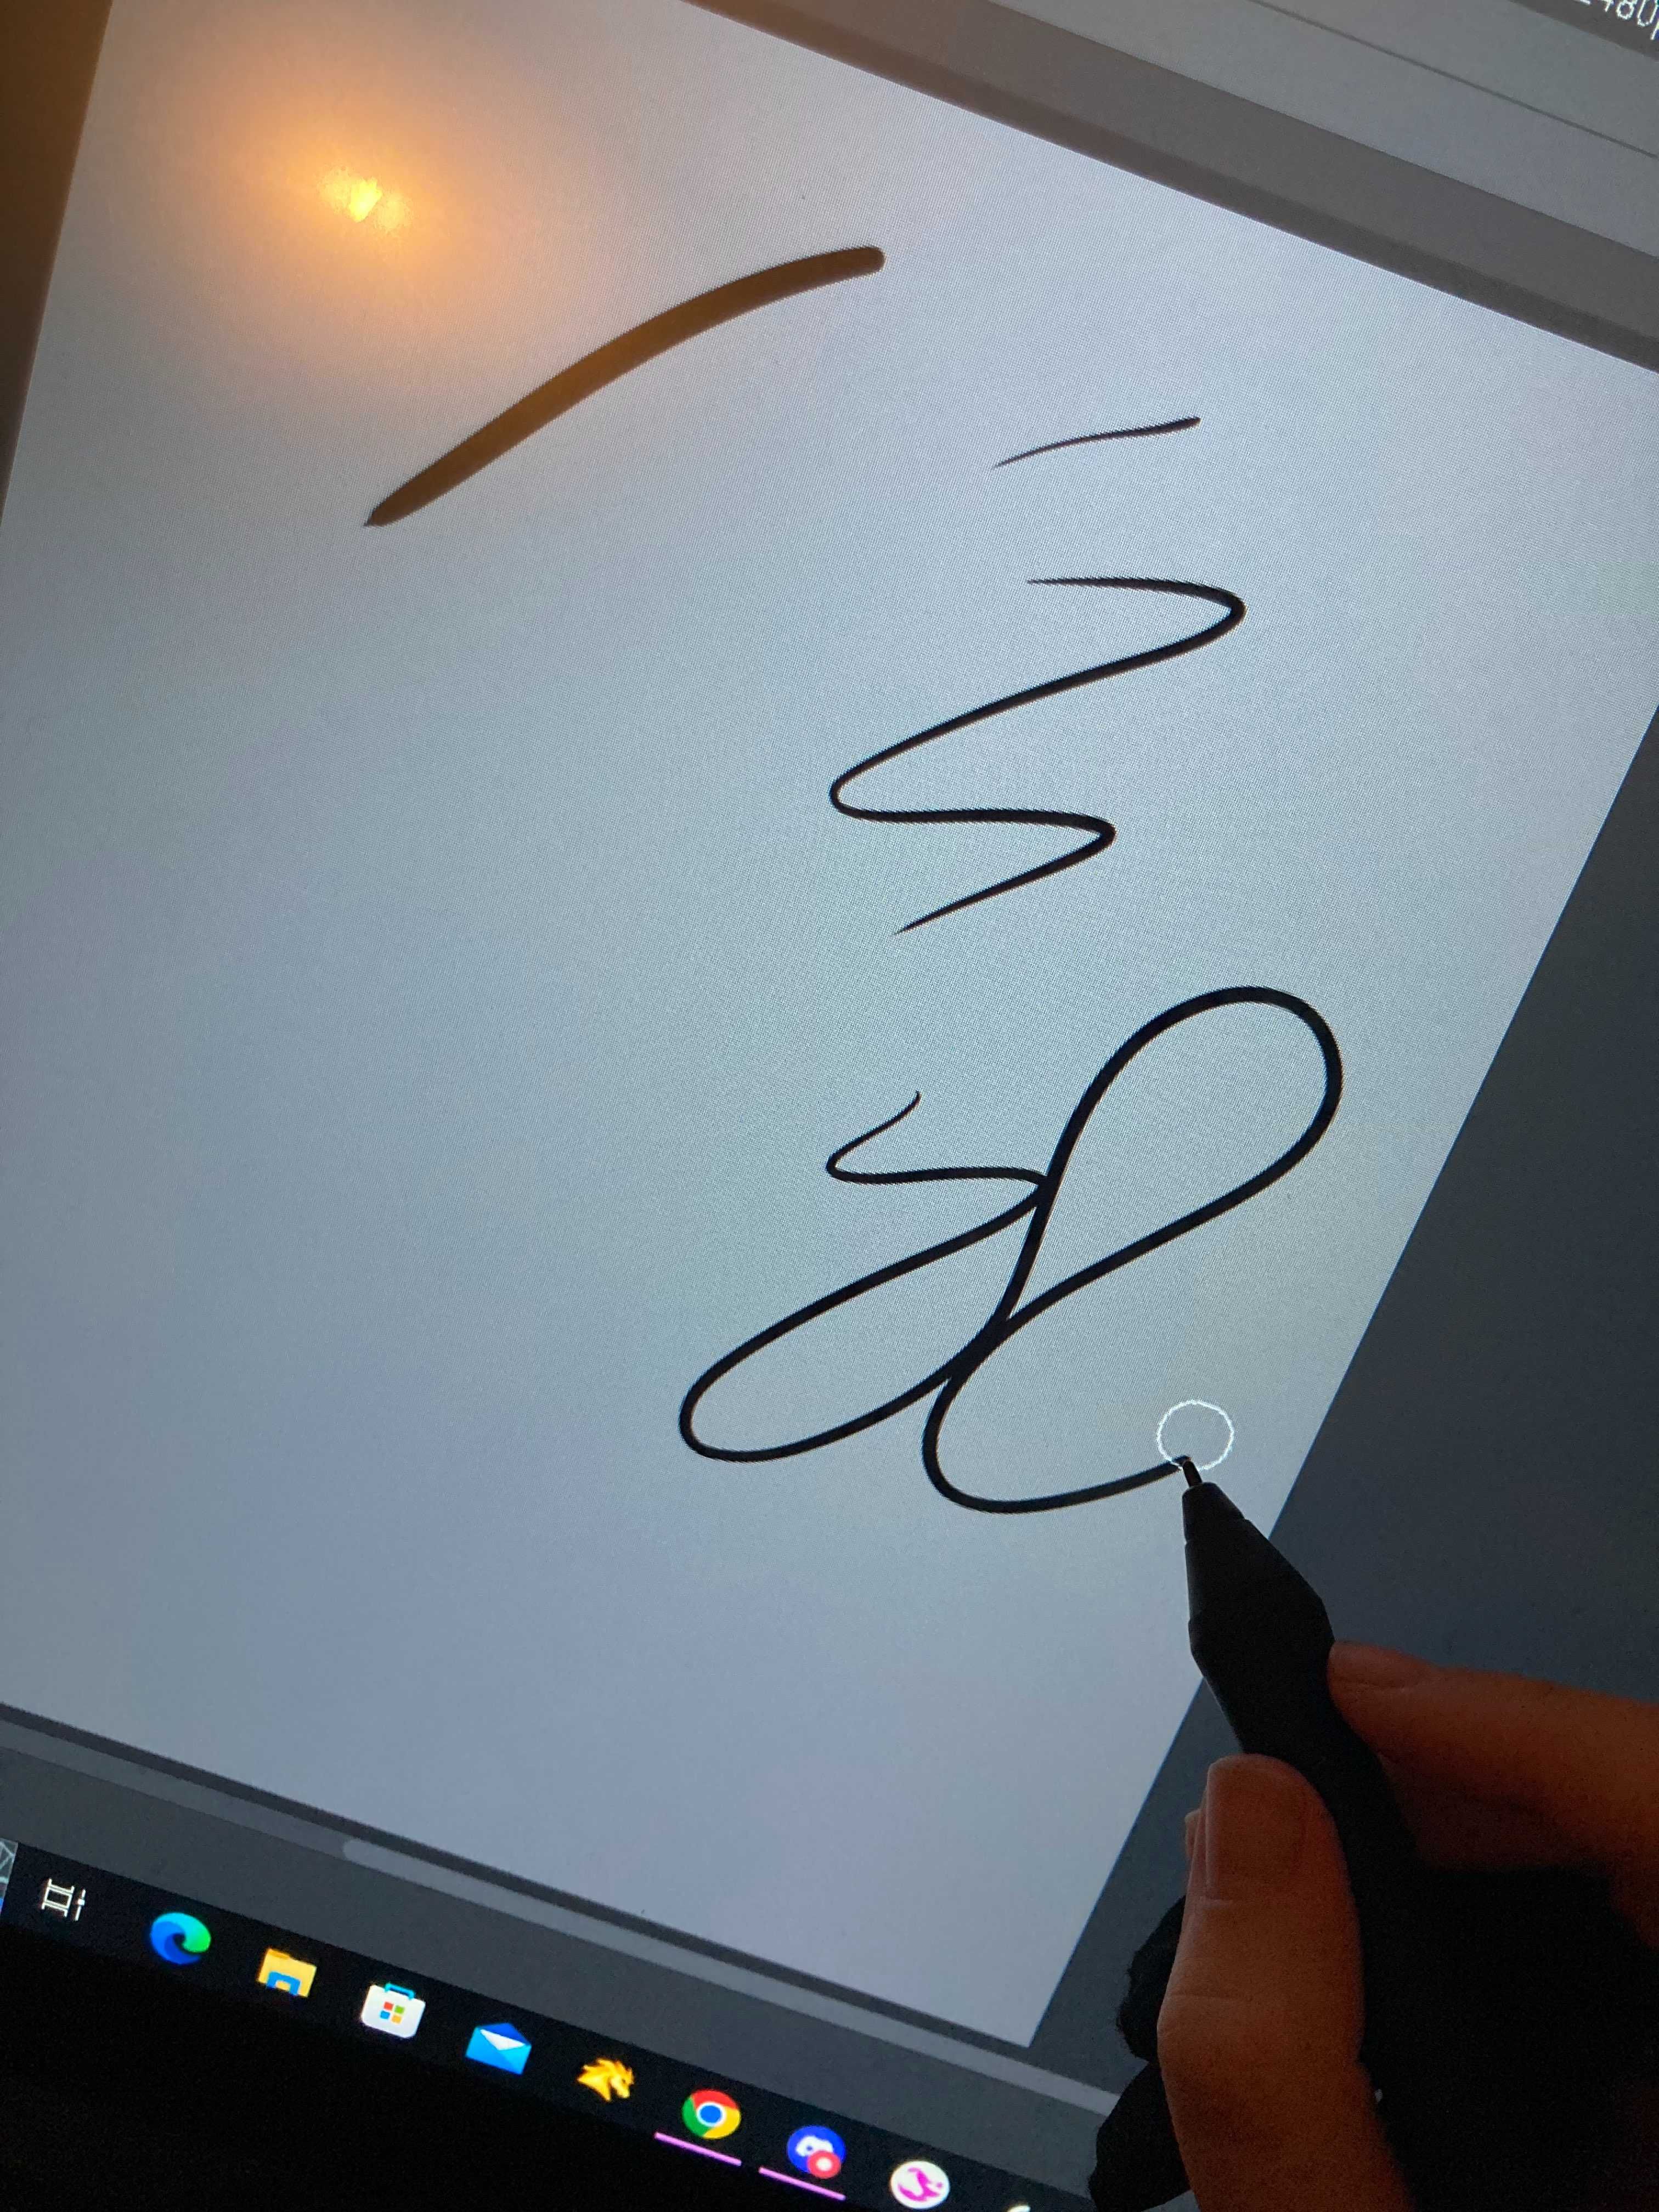 Xp-pen grafic tablet 22r pro